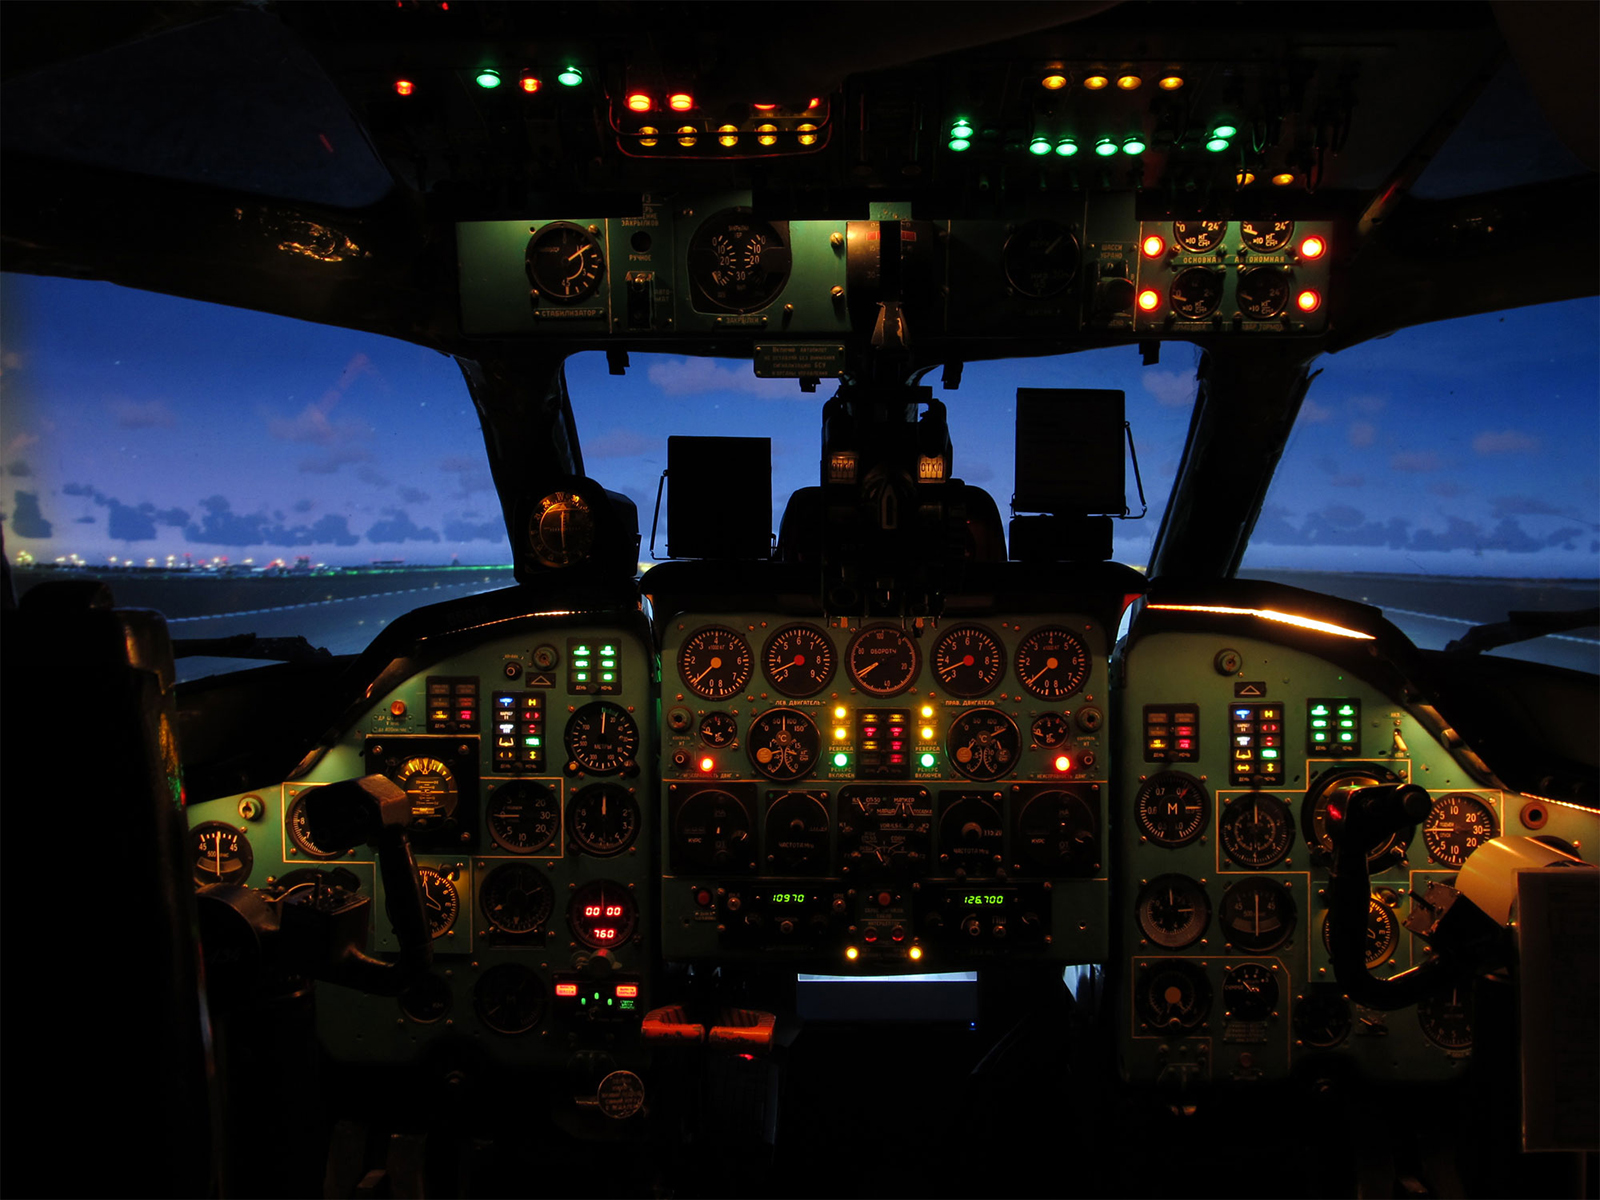 Tupolev Tu-134 flight and navigation training device